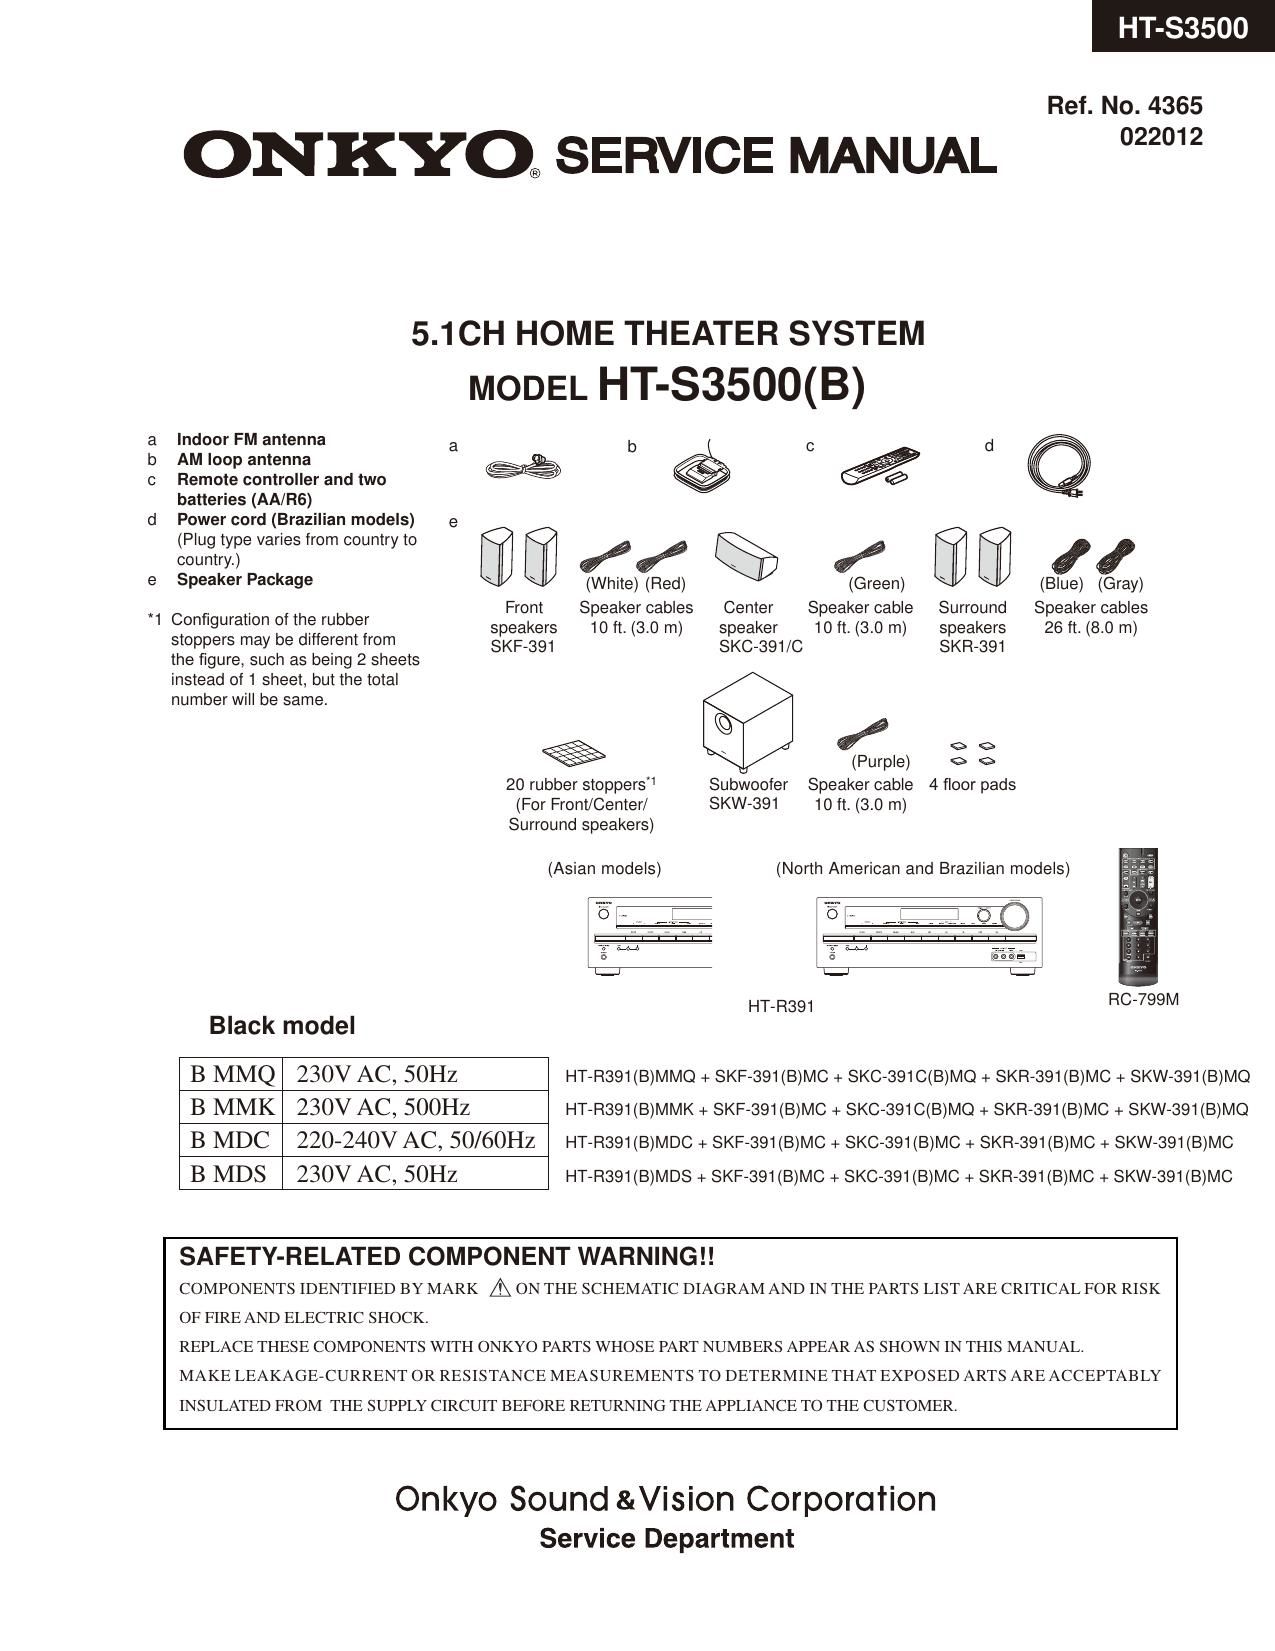 Onkyo HTS 3500 Service Manual